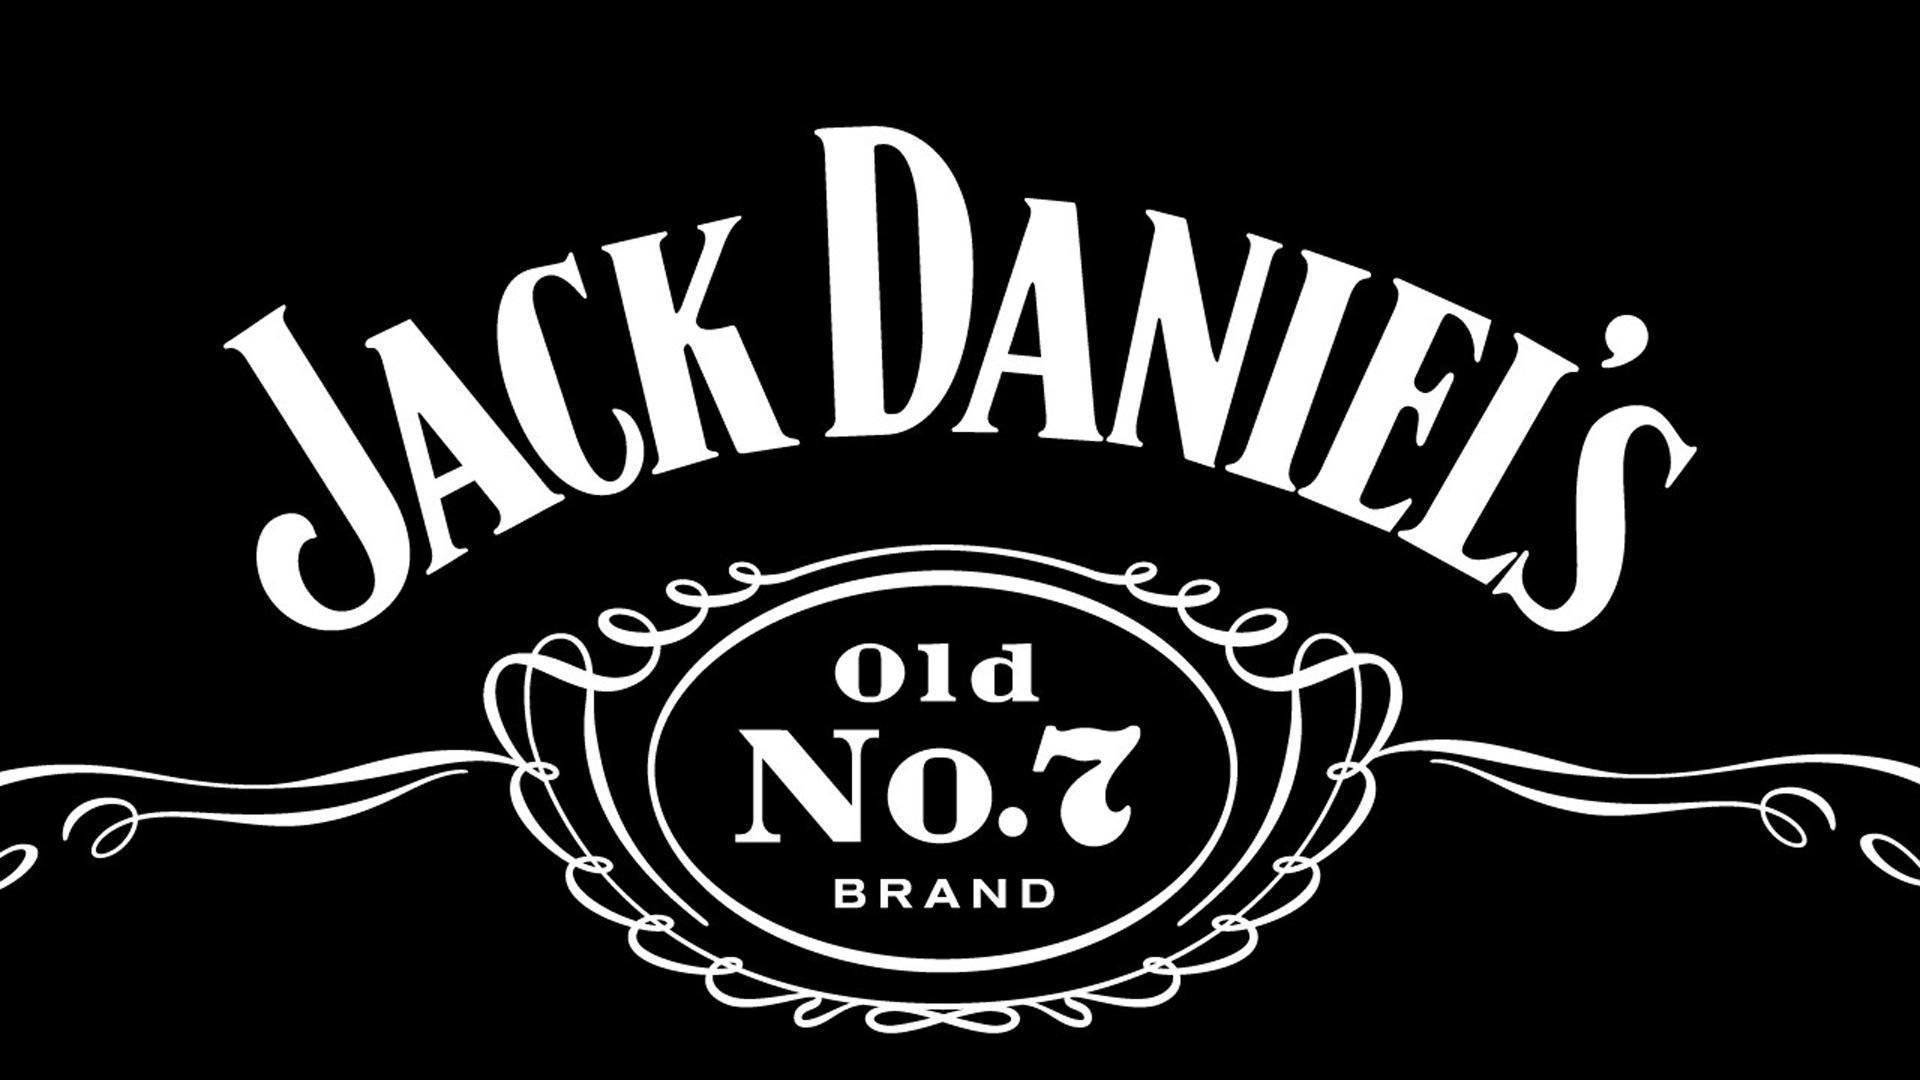 Jack Daniels Logos And Brand Wallpaper Wallpaper. Naviwall